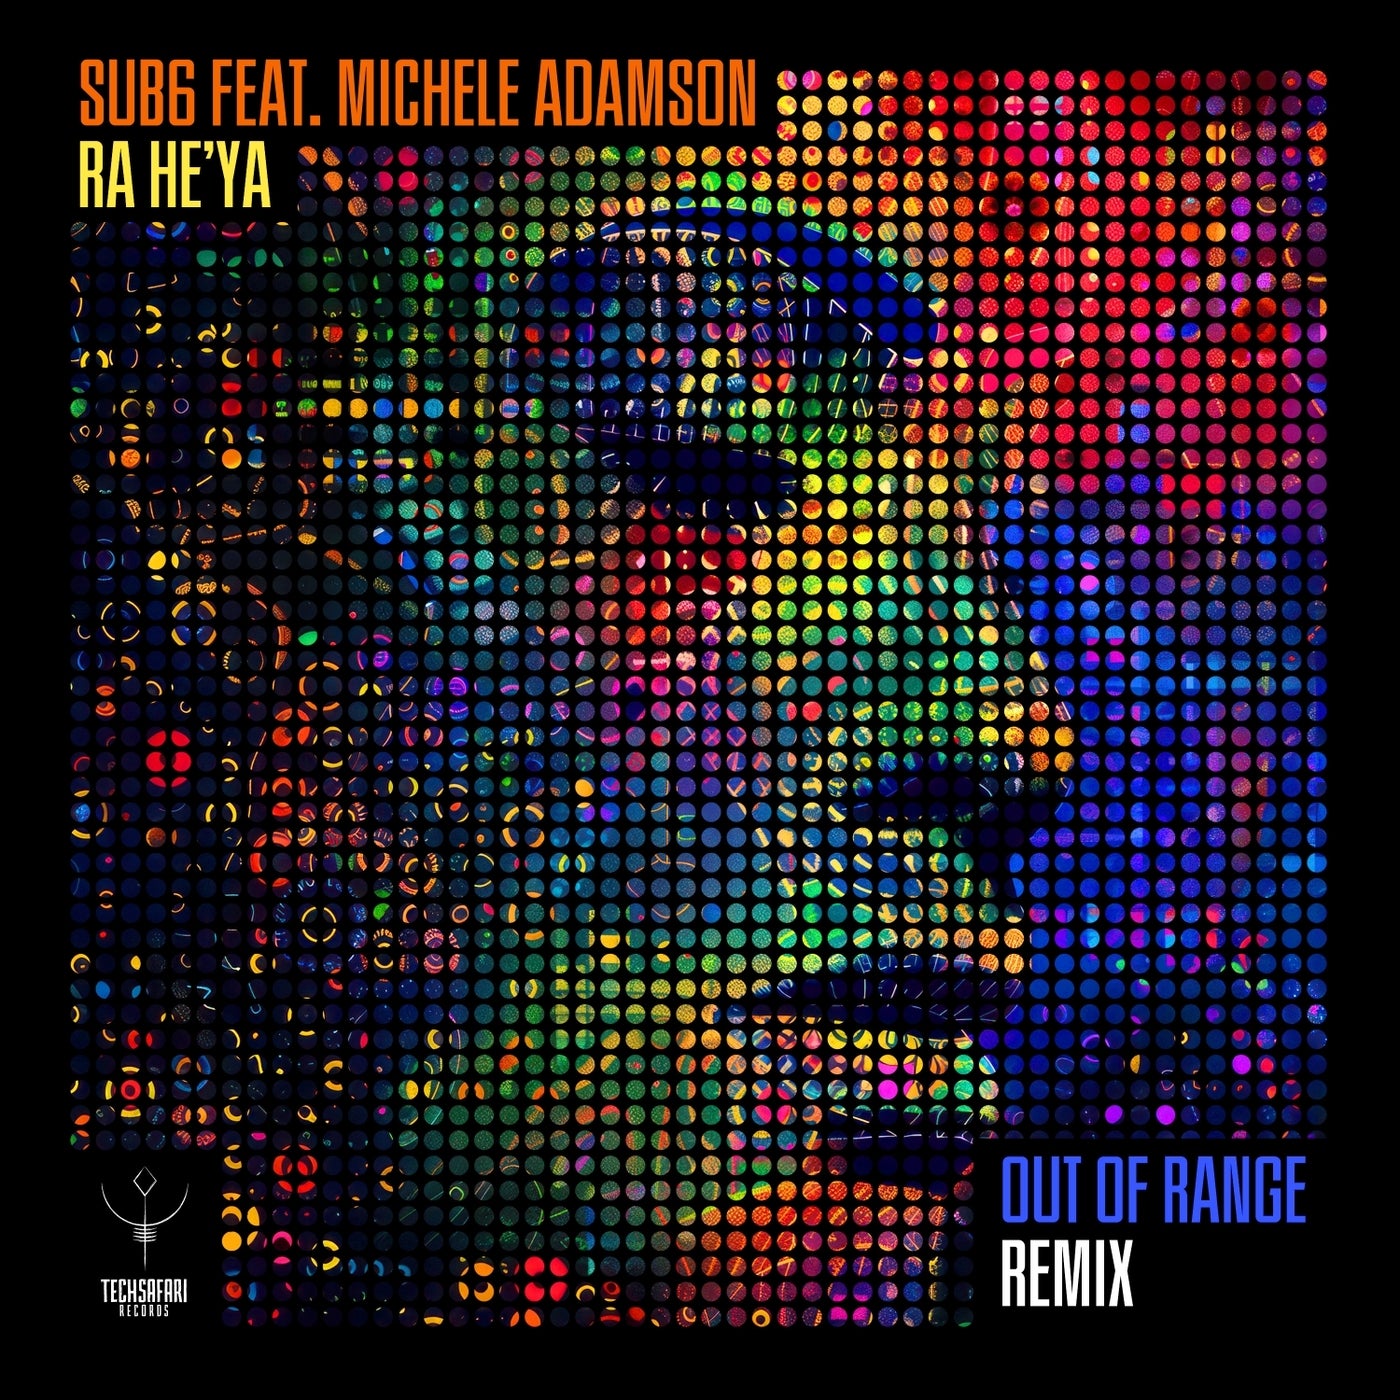 Cover - Michele Adamson, Sub6 - Ra He'ya (feat. Michele Adamson) (Out of Range remix)